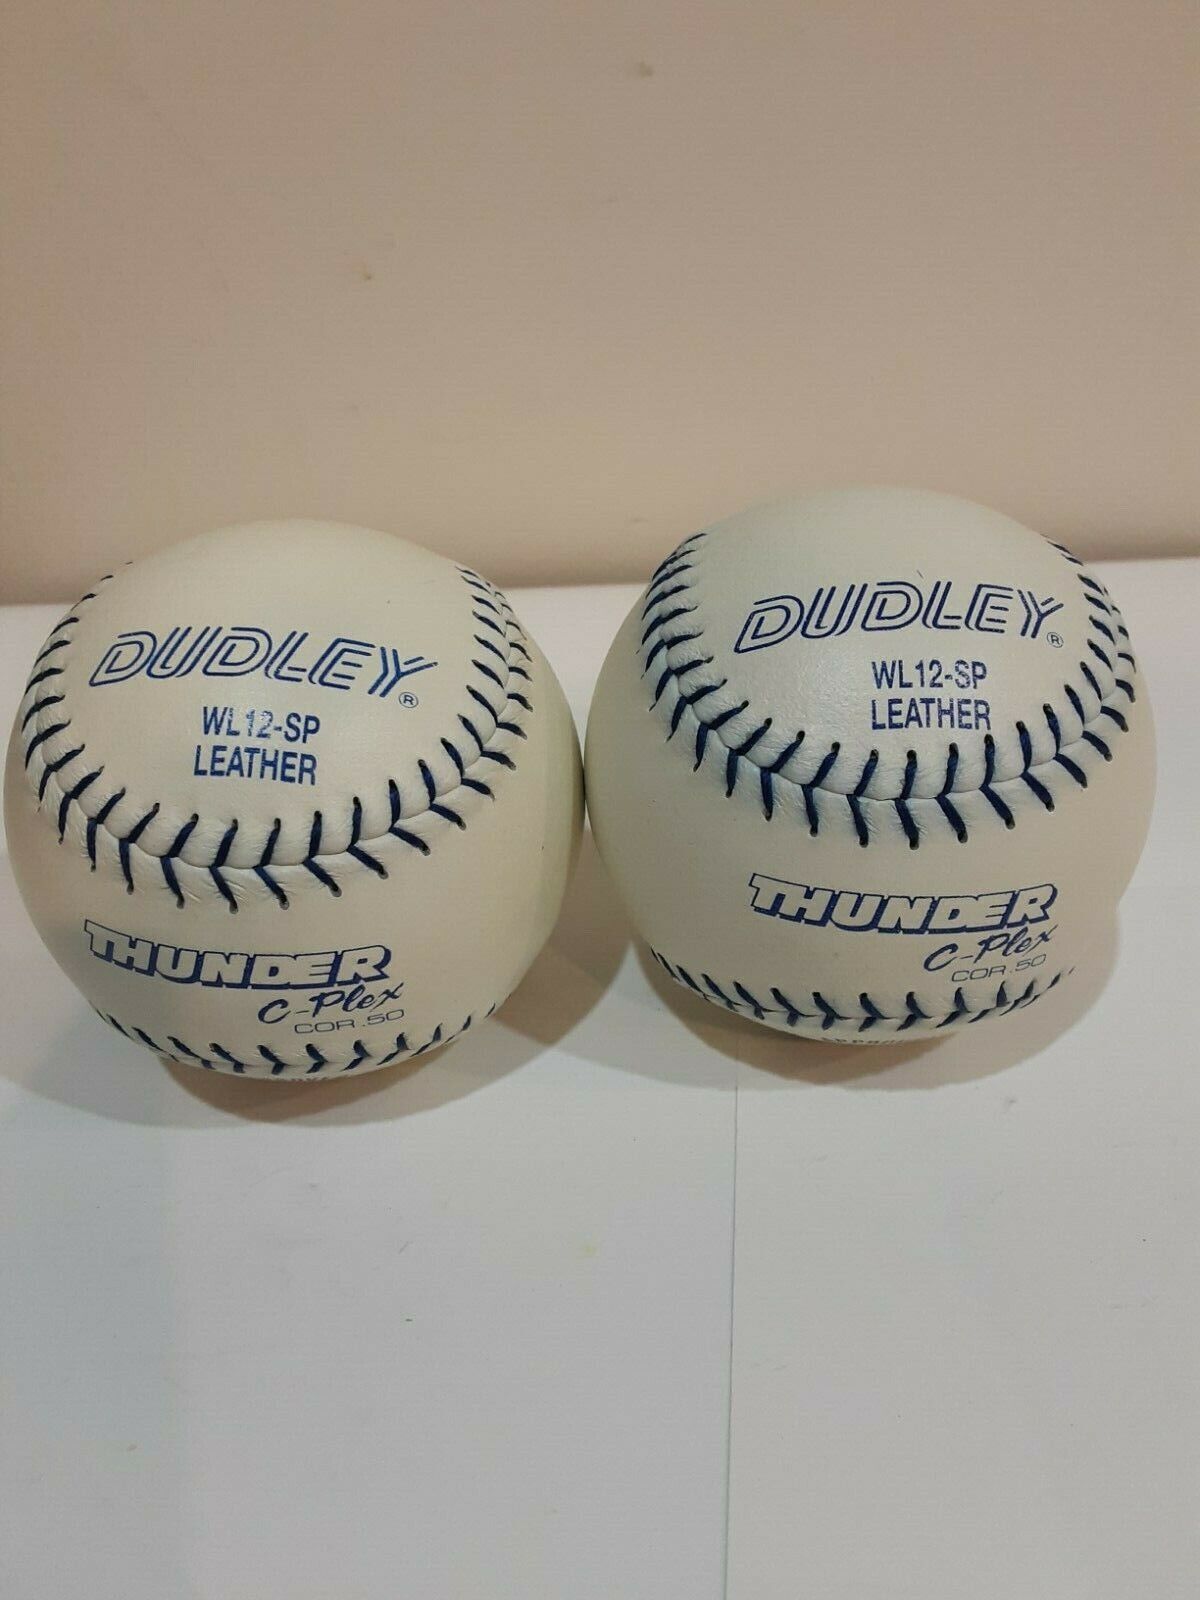 2 Nos Dudley C-plex Cor .50 Usssa Leather Softball